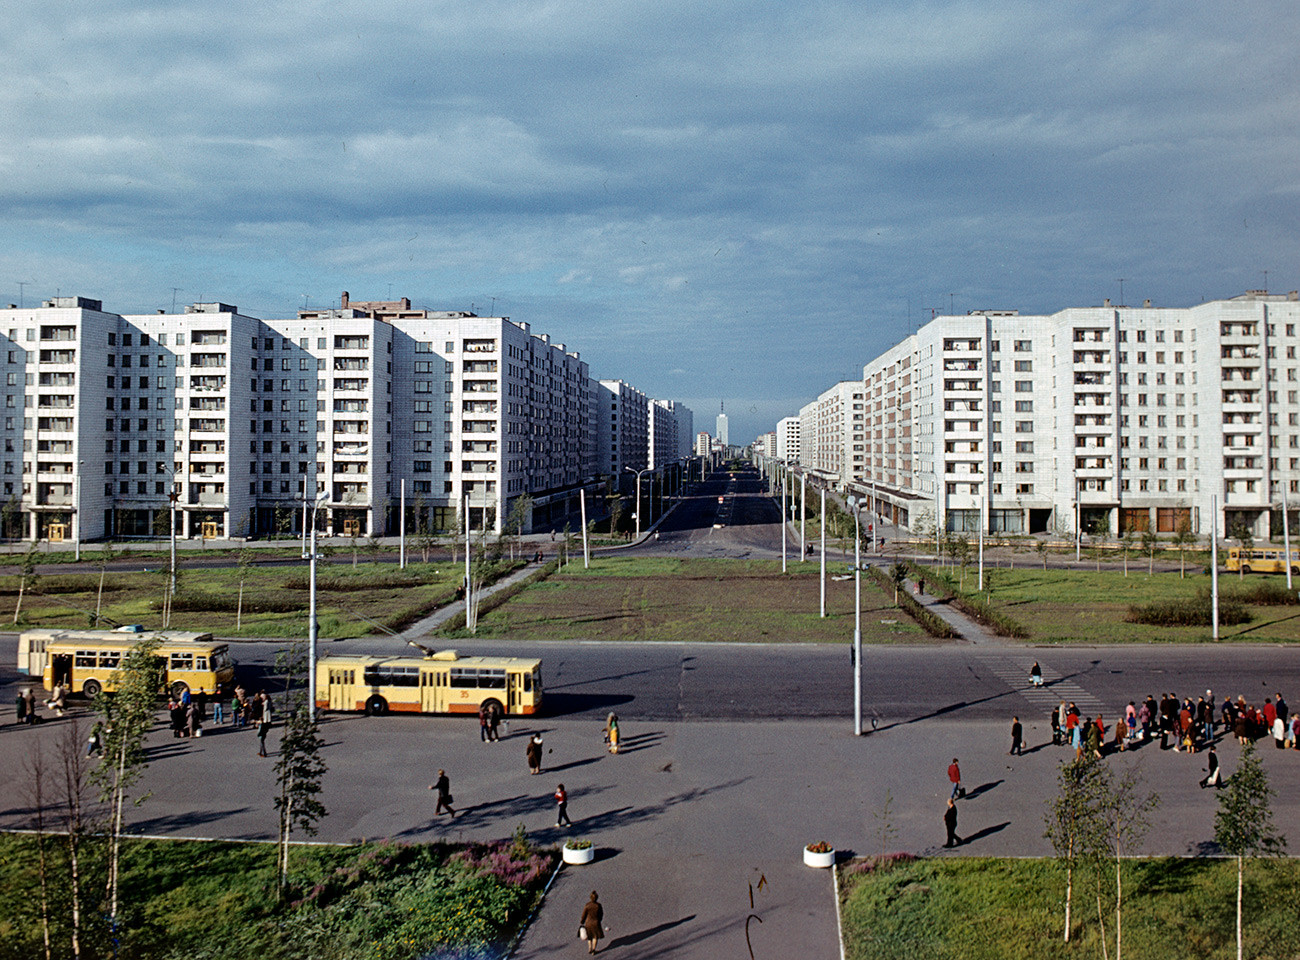 Nove brežnjevke 1981, Arhangeljsk 

